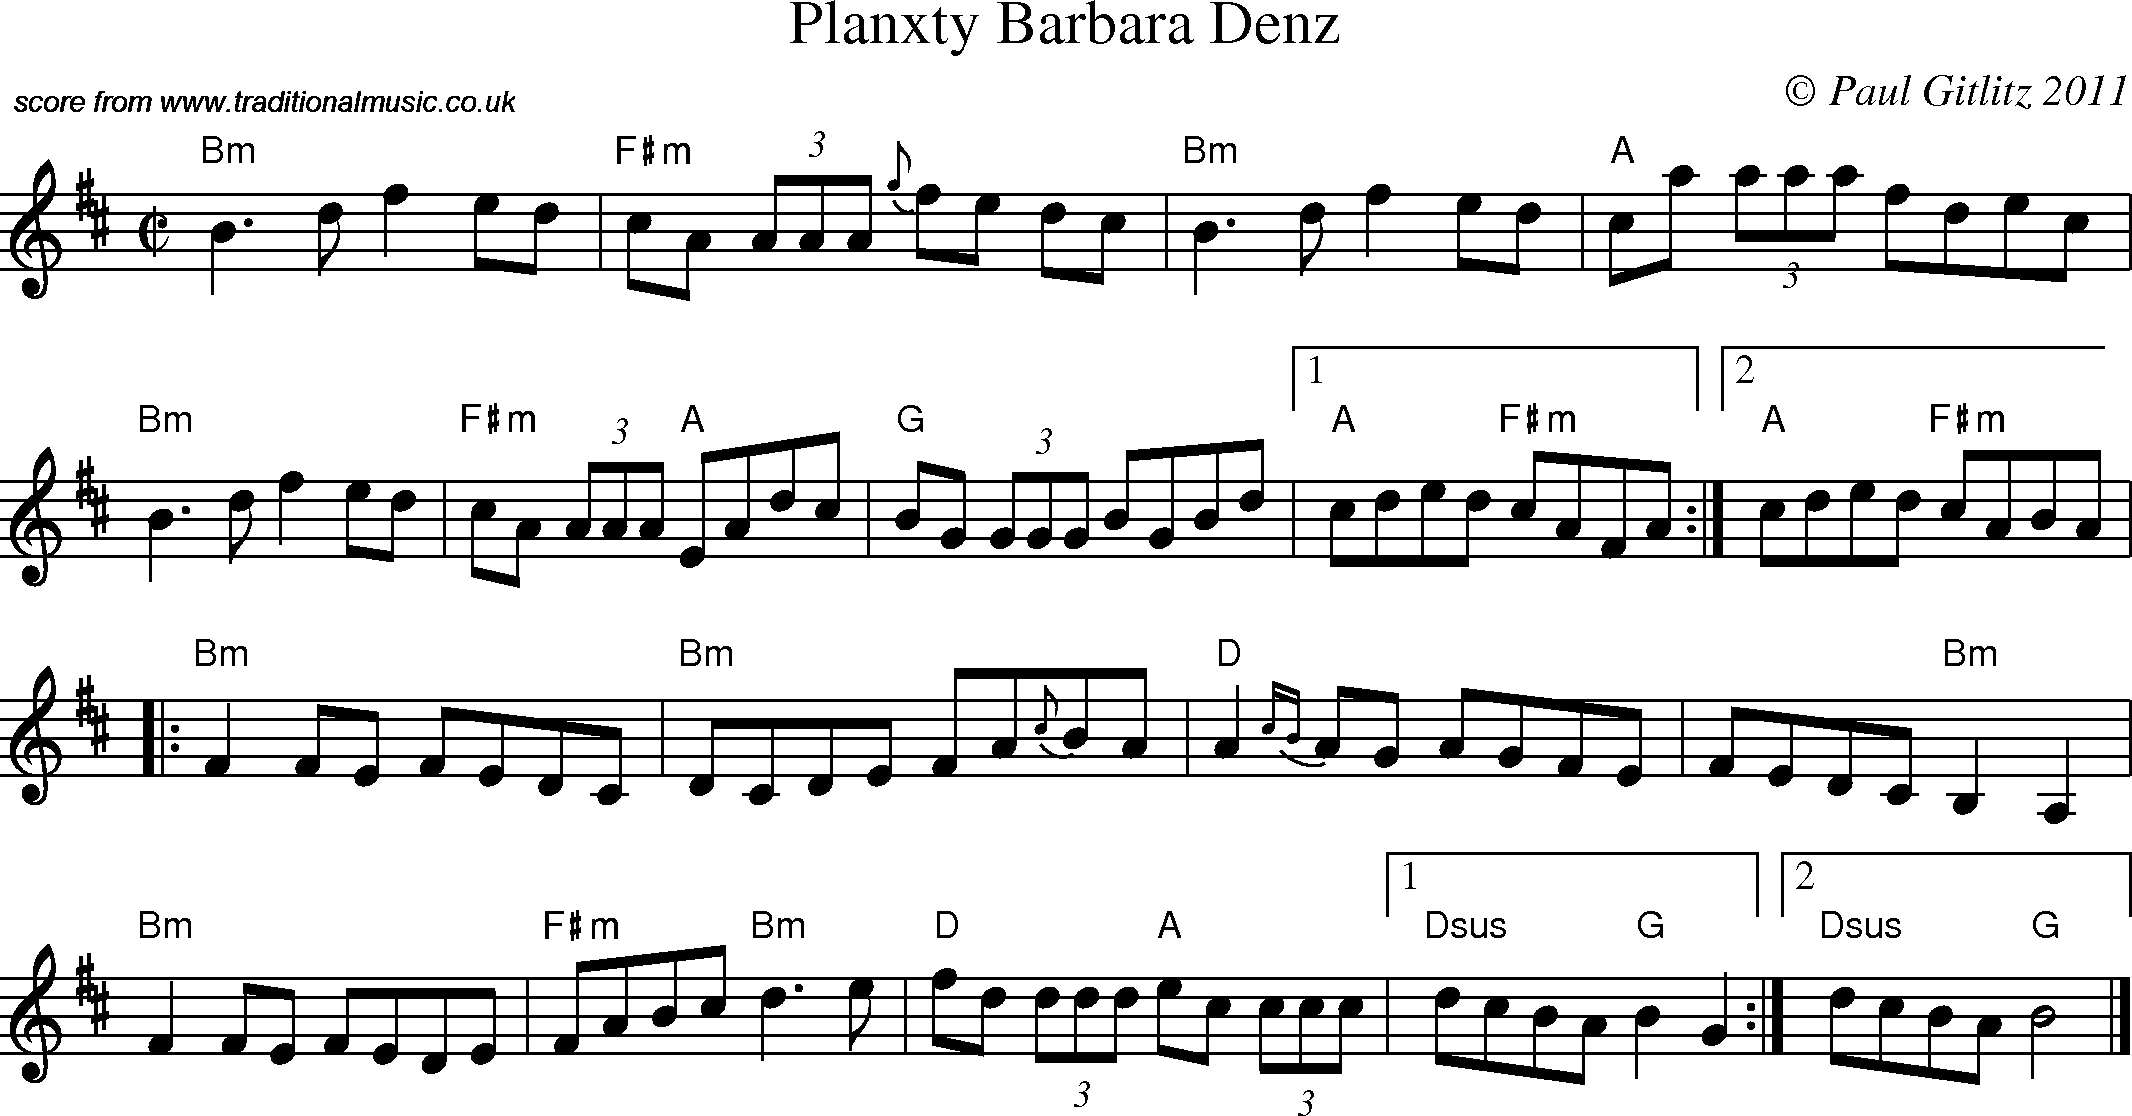 Sheet Music Score for Reel - Planxty Barbara Denz